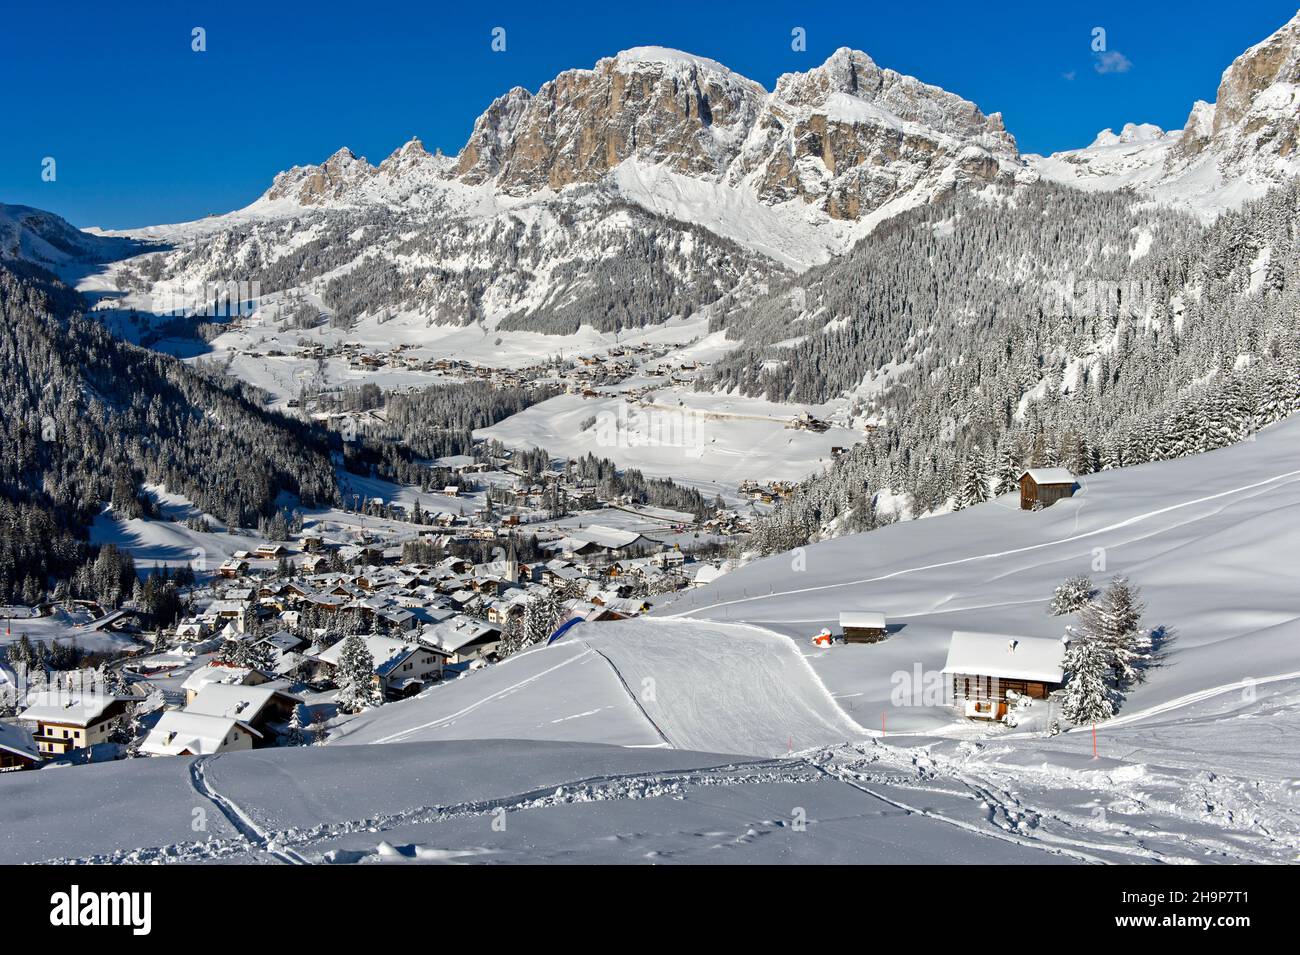 Empty ski slopes near the mountain village of La Villa in front of the snow-covered Dolomite peaks, Alta Badia ski area, Dolomites, South Tyrol, Italy Stock Photo